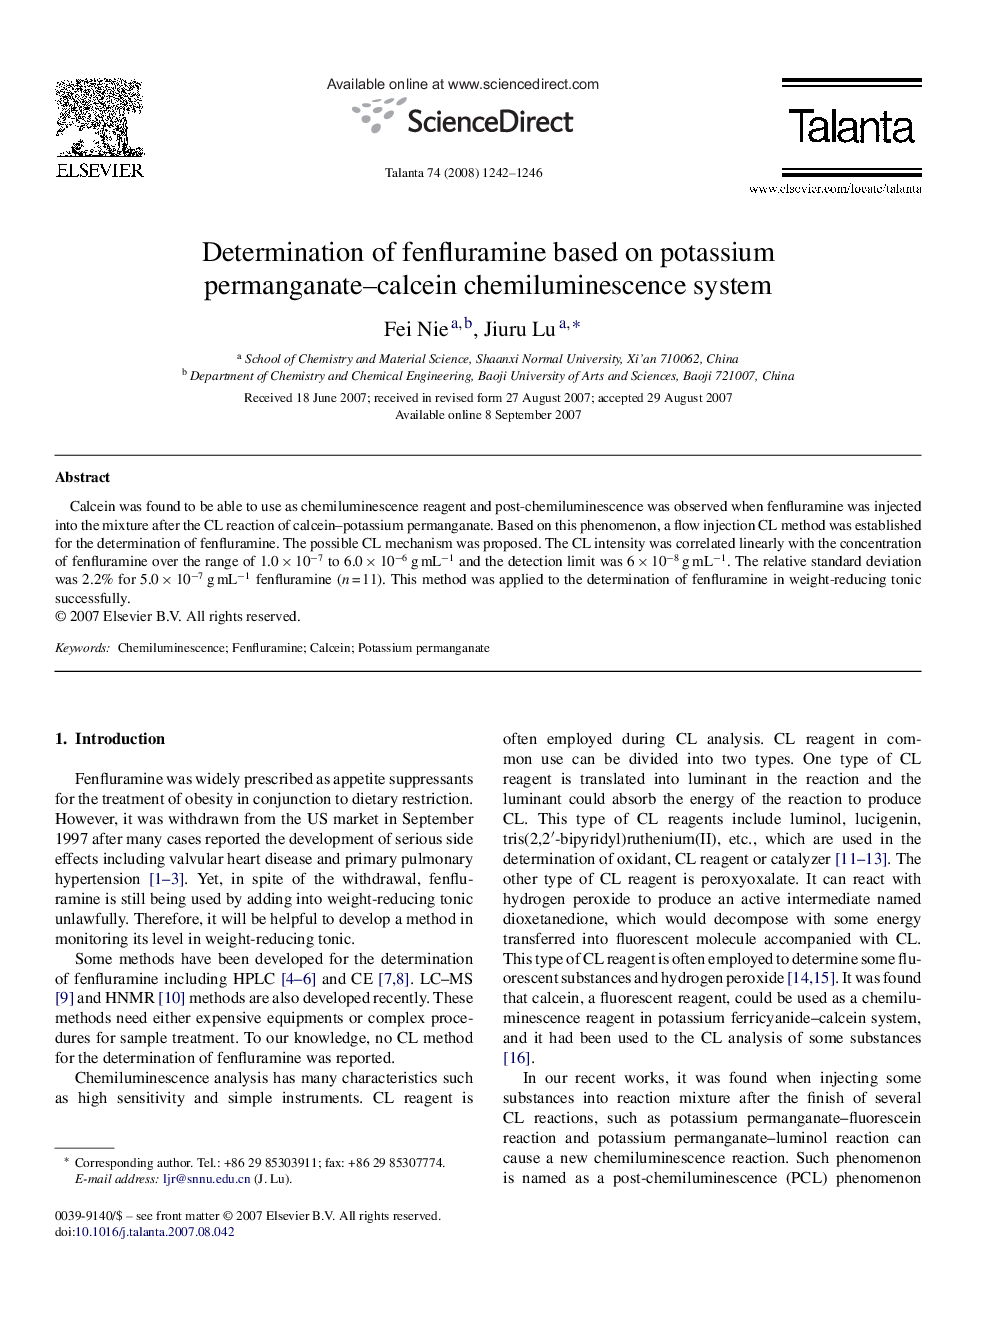 Determination of fenfluramine based on potassium permanganate–calcein chemiluminescence system